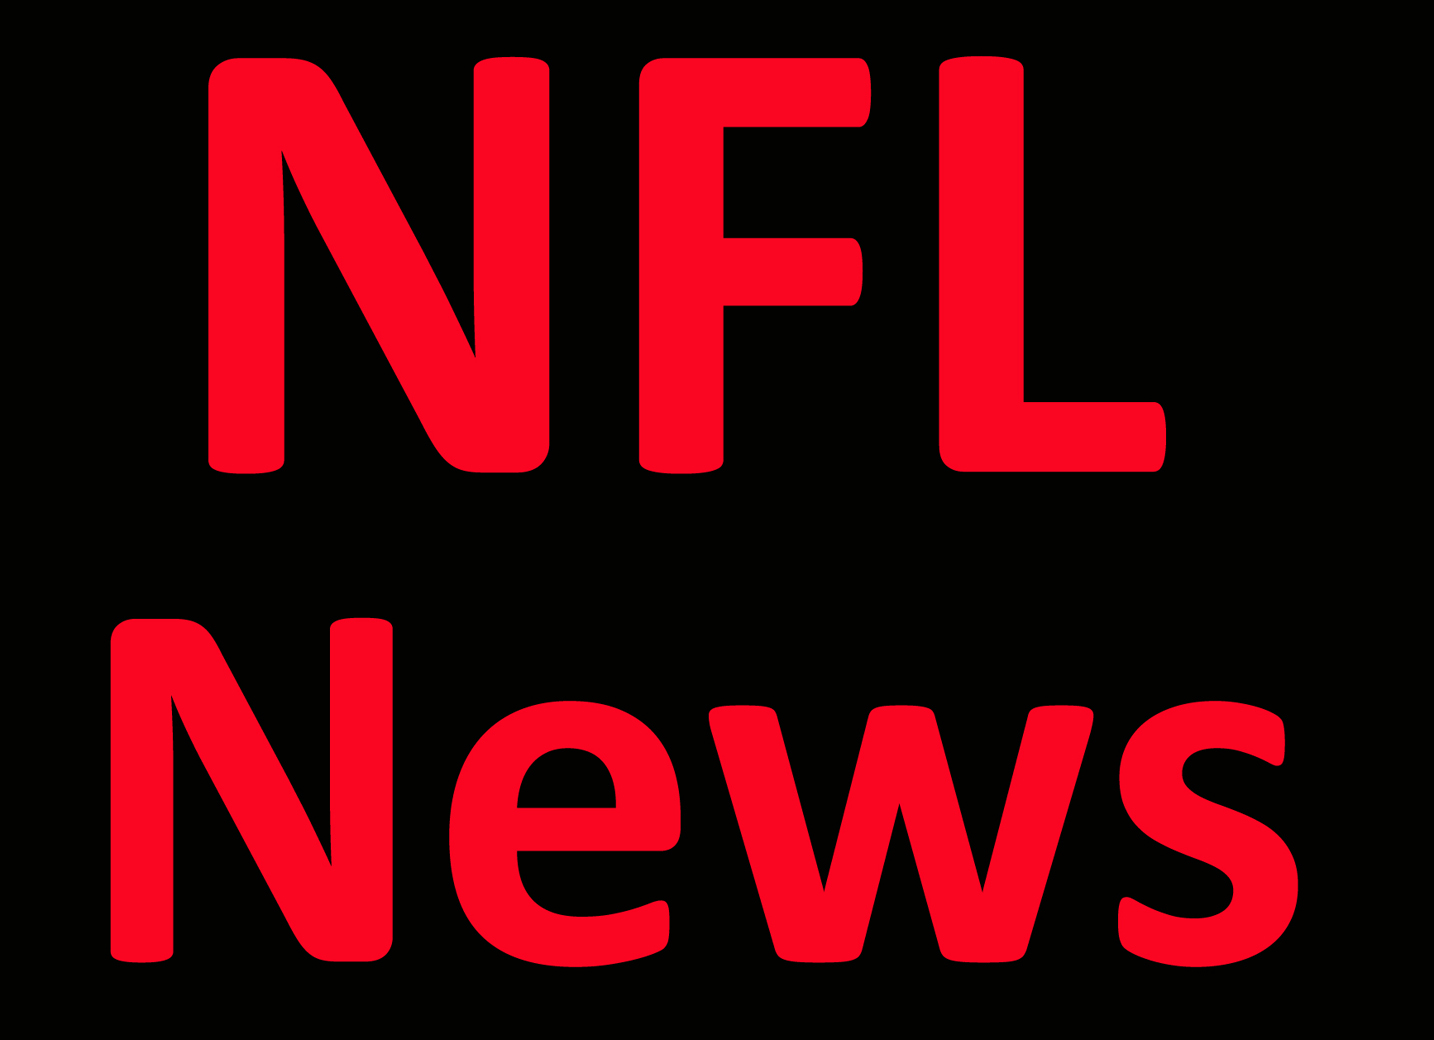 NFL News: Rams to address any brawl discipline ‘internally’ Per Report